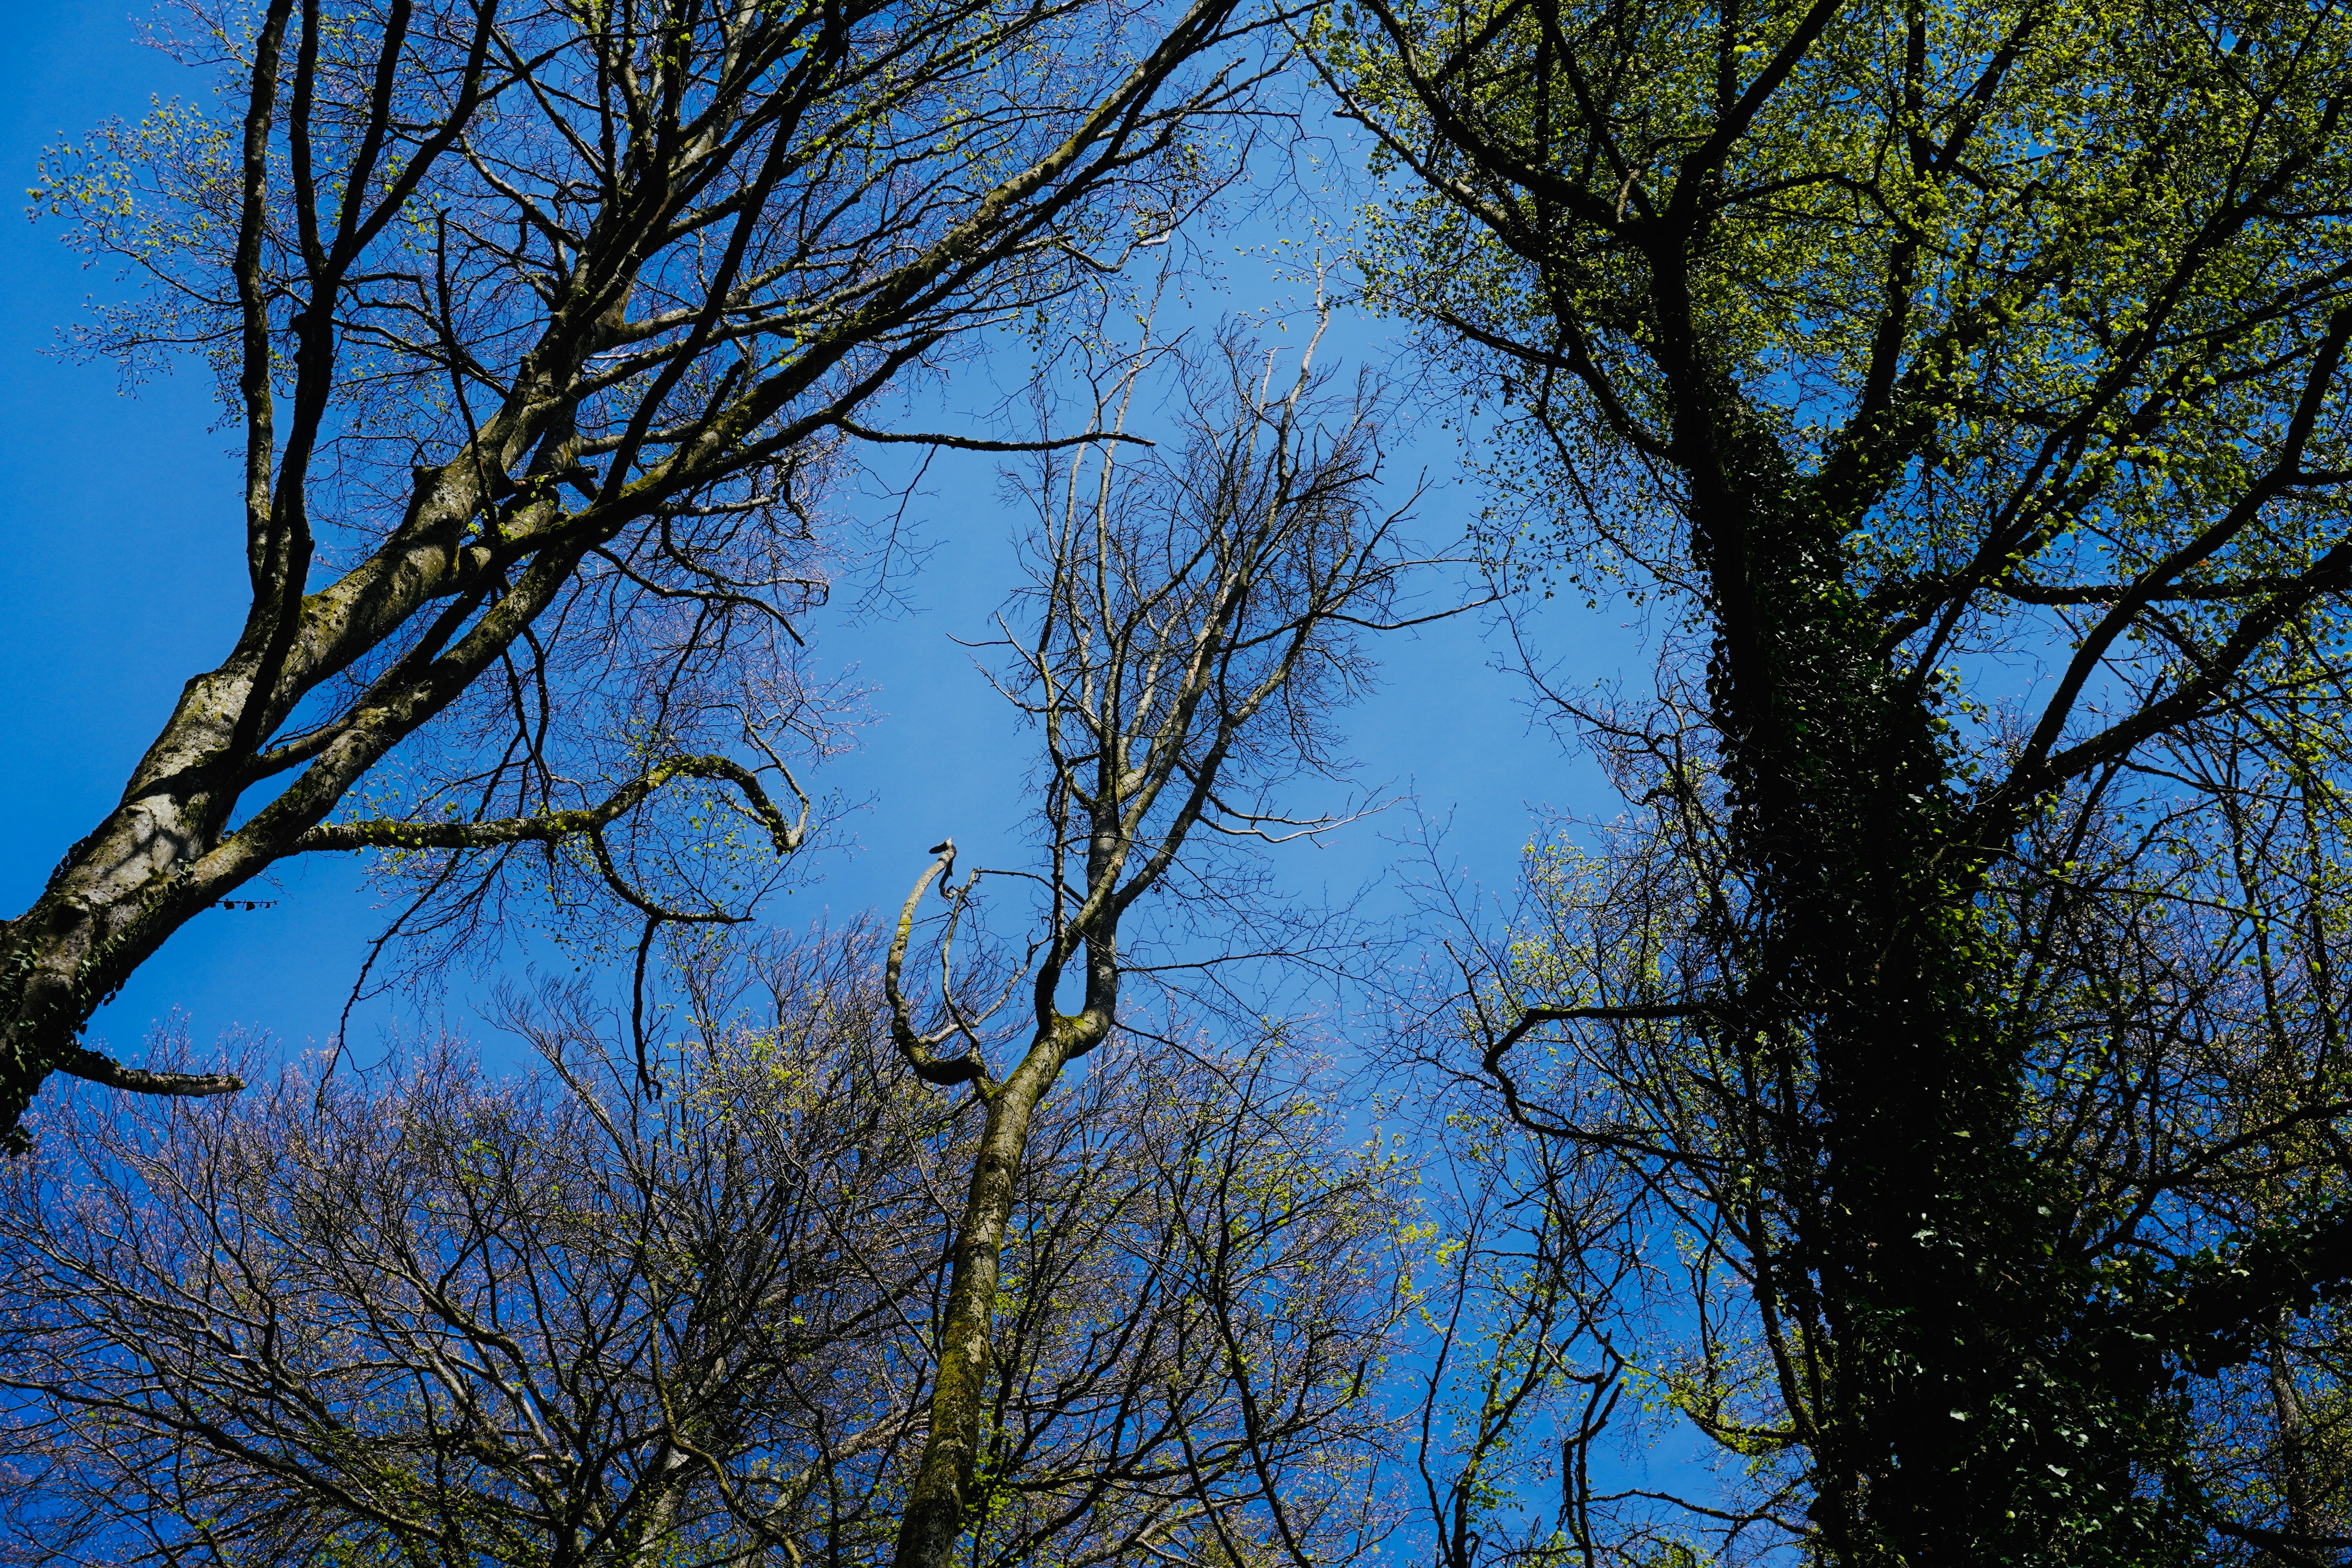 brown tree under blue sky during daytime